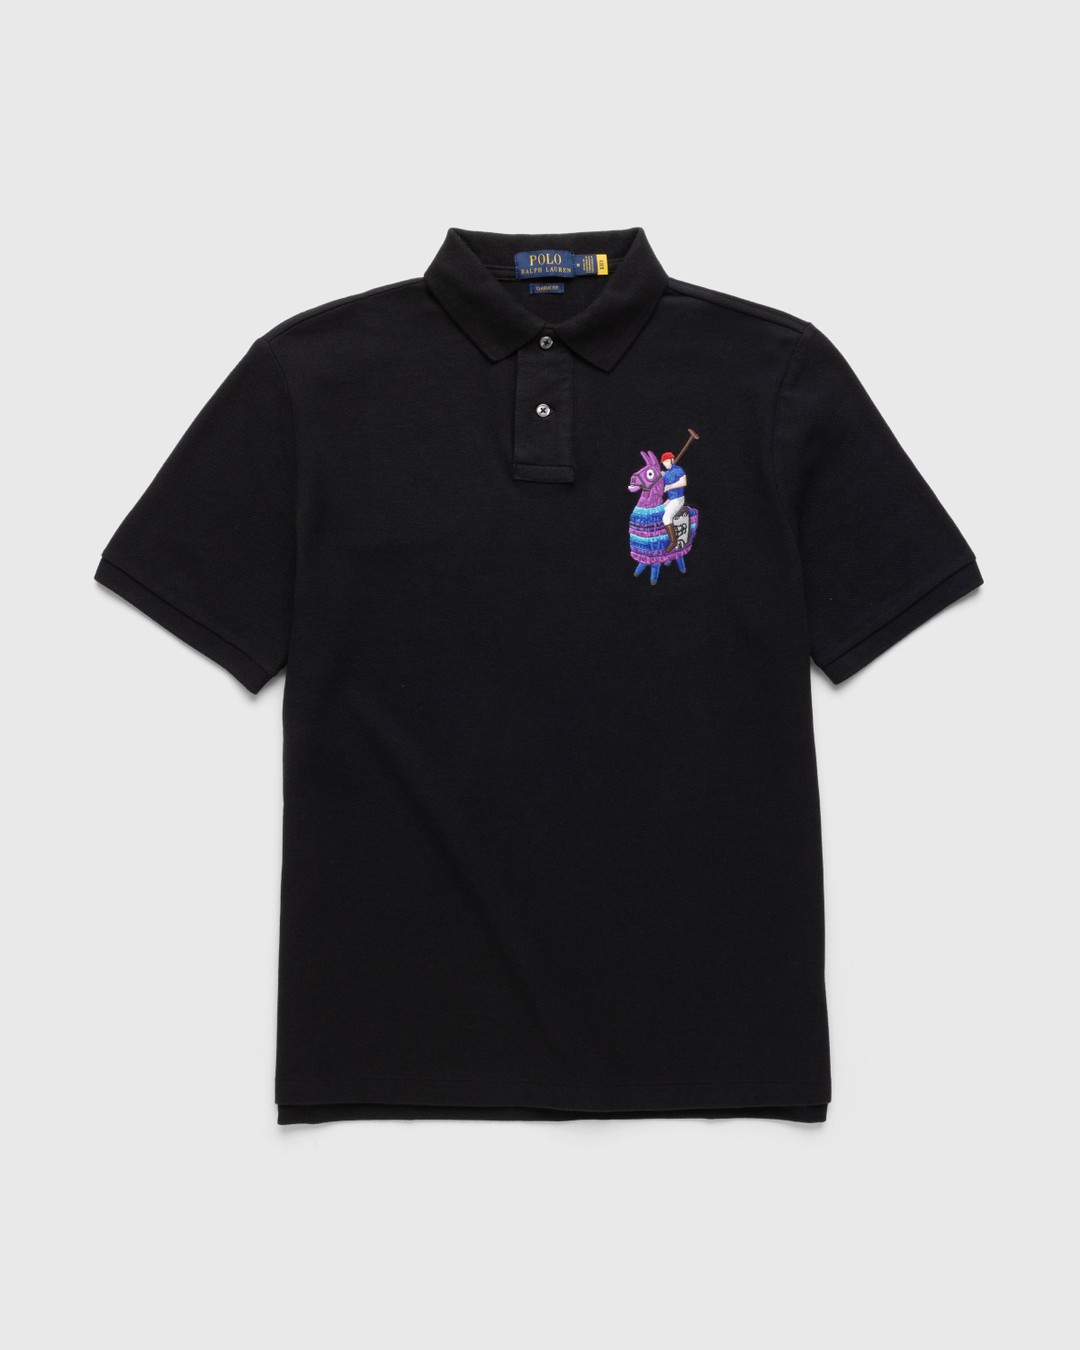 Ralph Lauren x Fortnite – Short Sleeve Polo Shirt Black - Polos - Black - Image 1